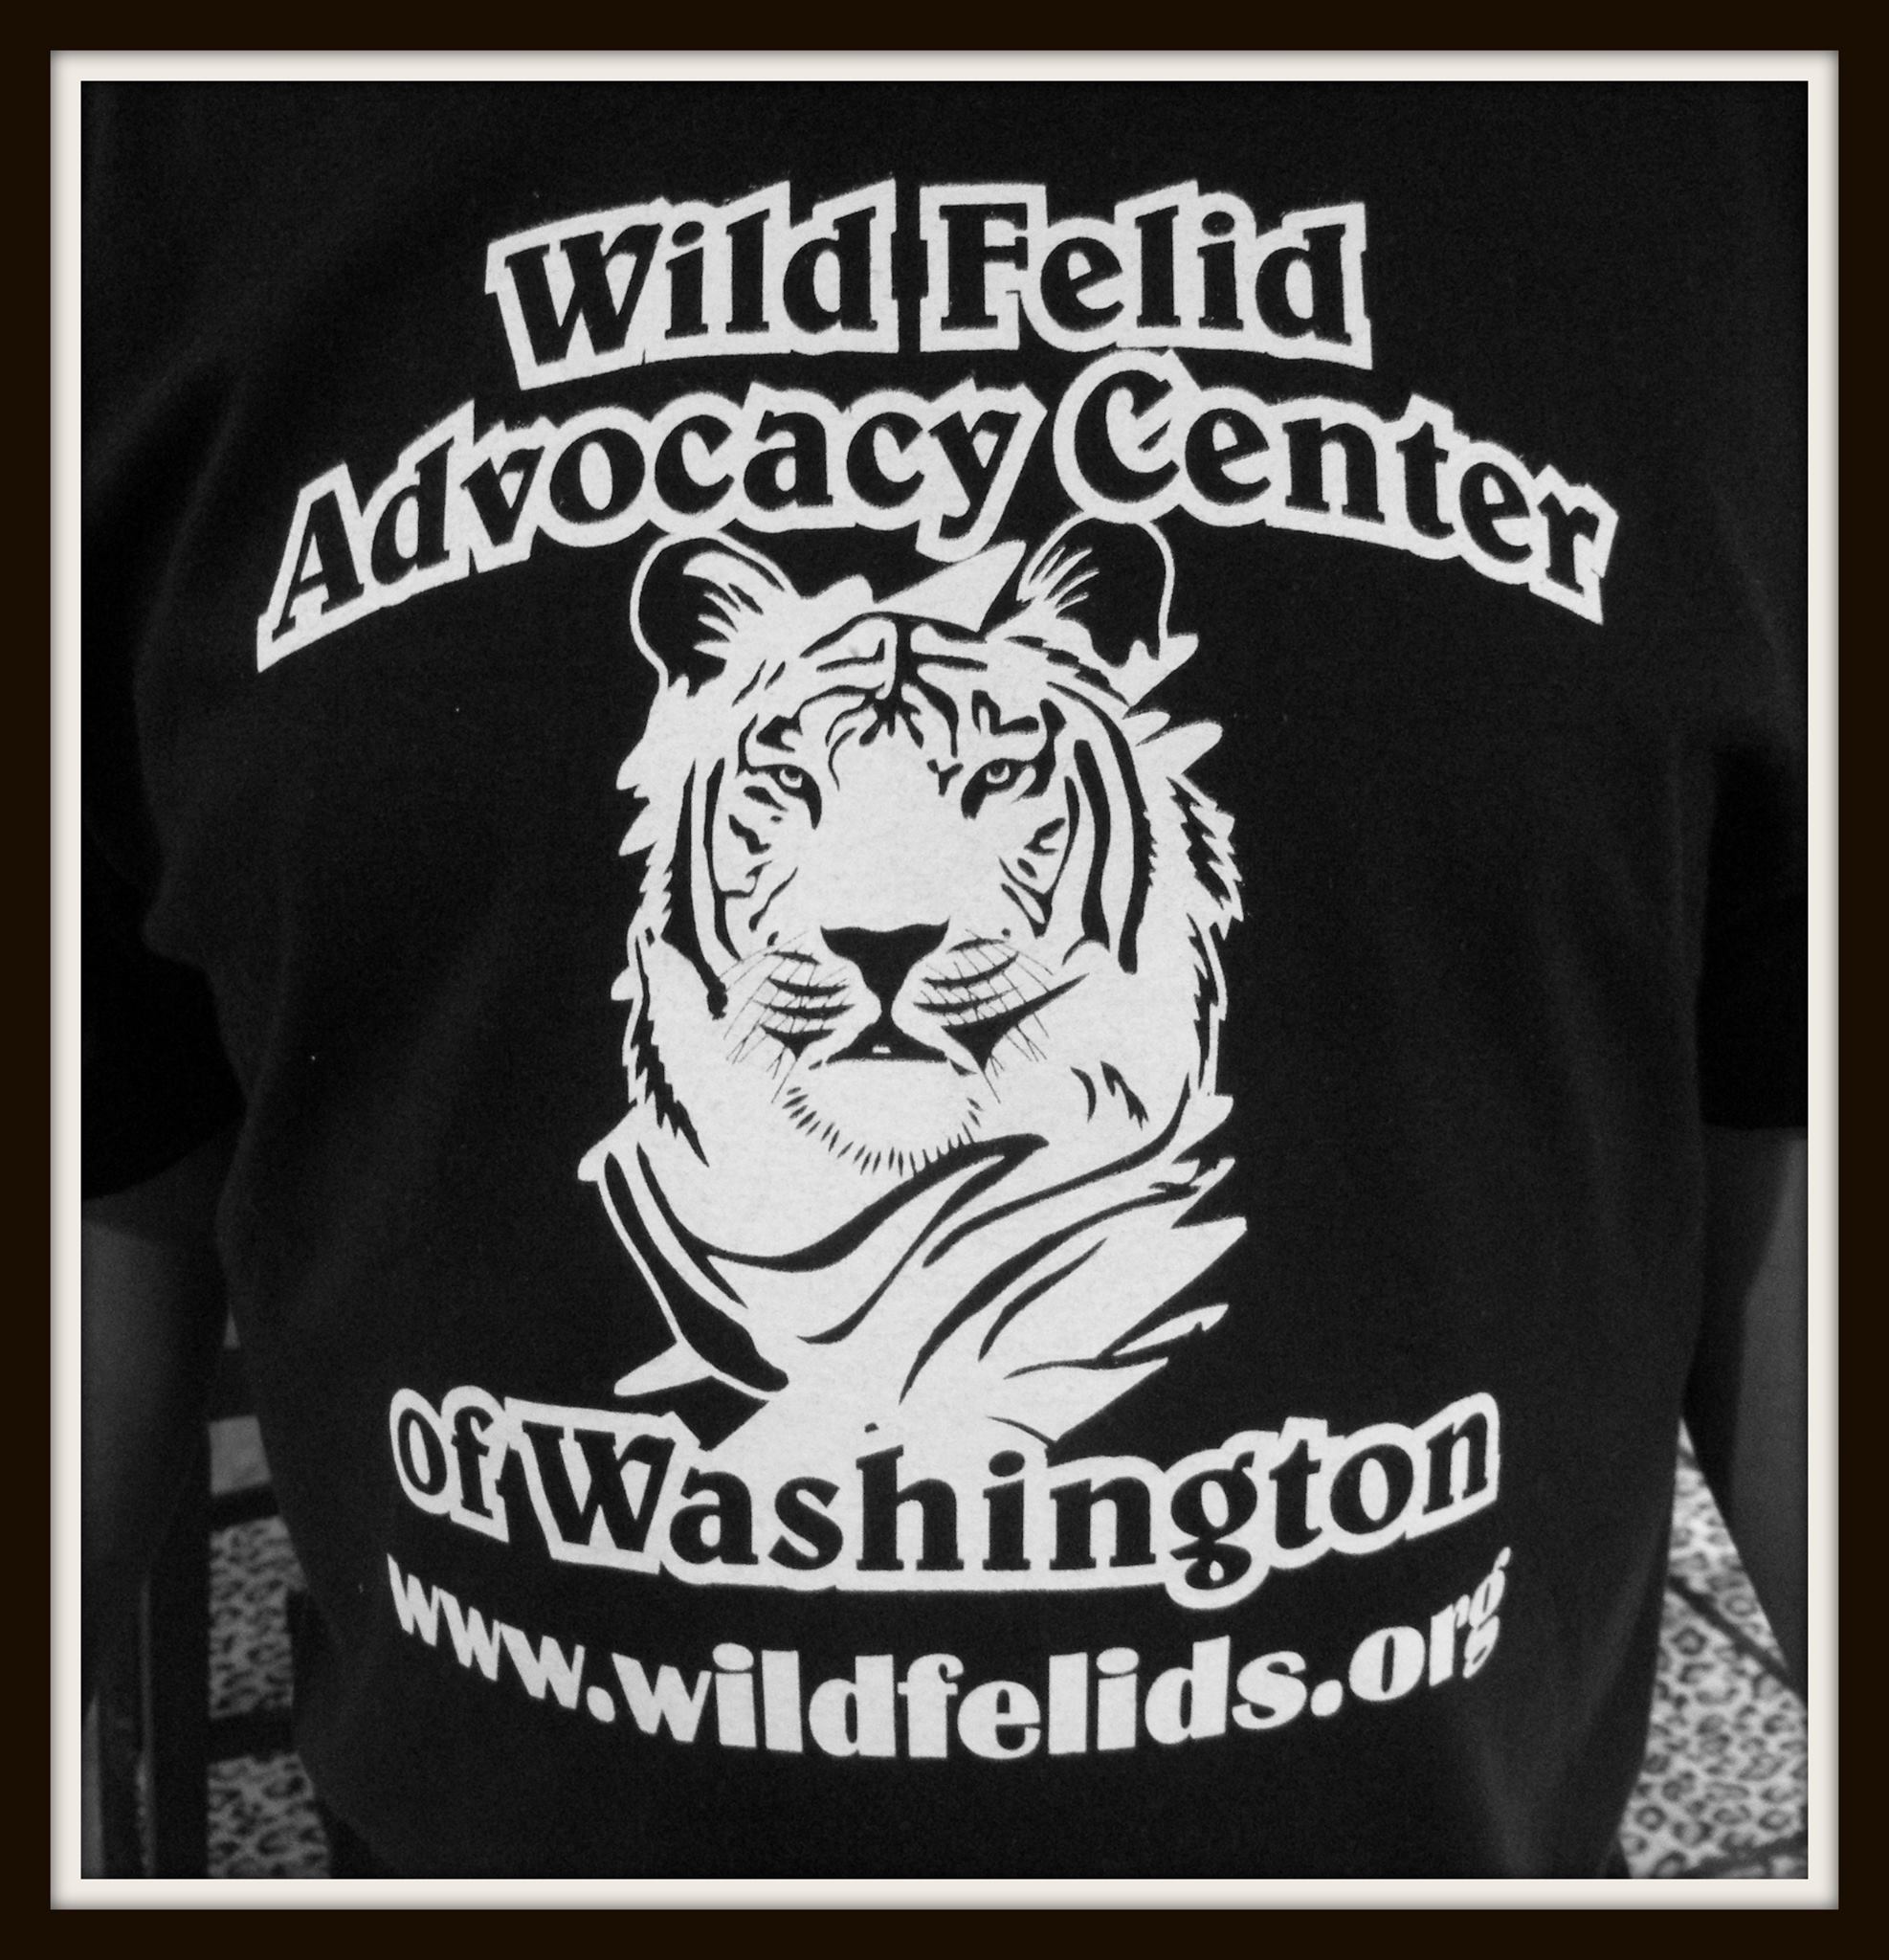 Wild Felid Advocacy Center of Washington Logo